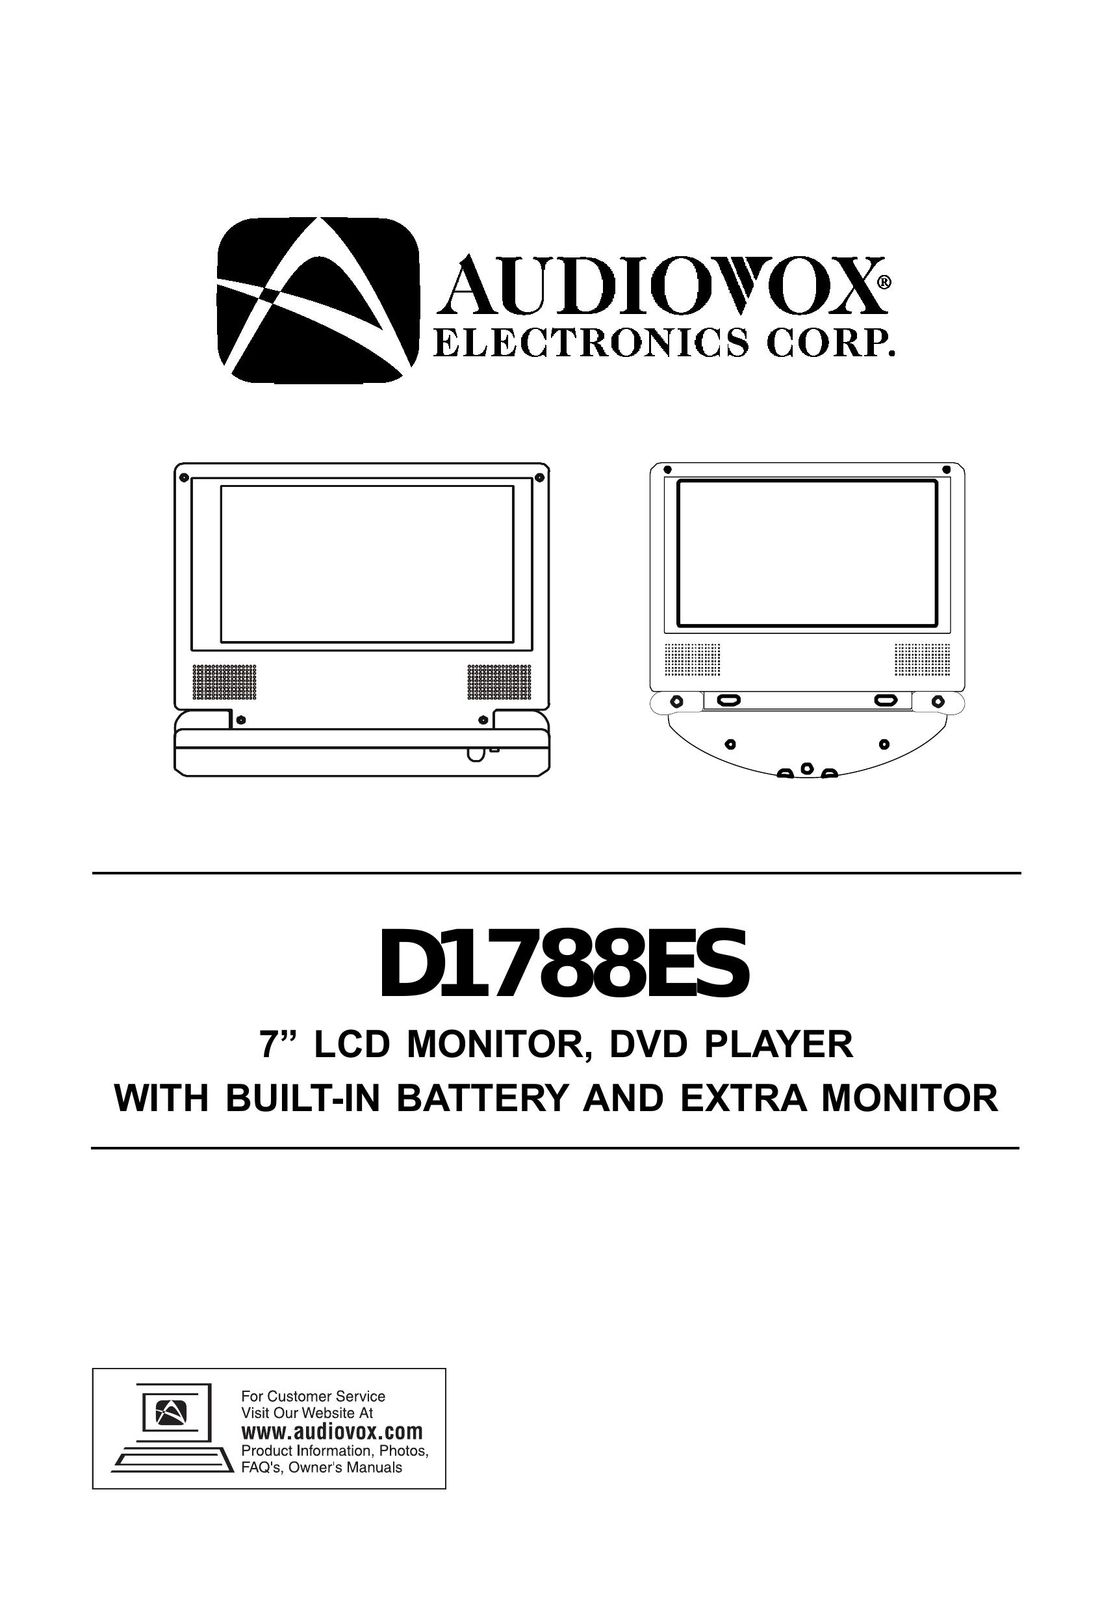 Audiovox D1788ES DVD Player User Manual